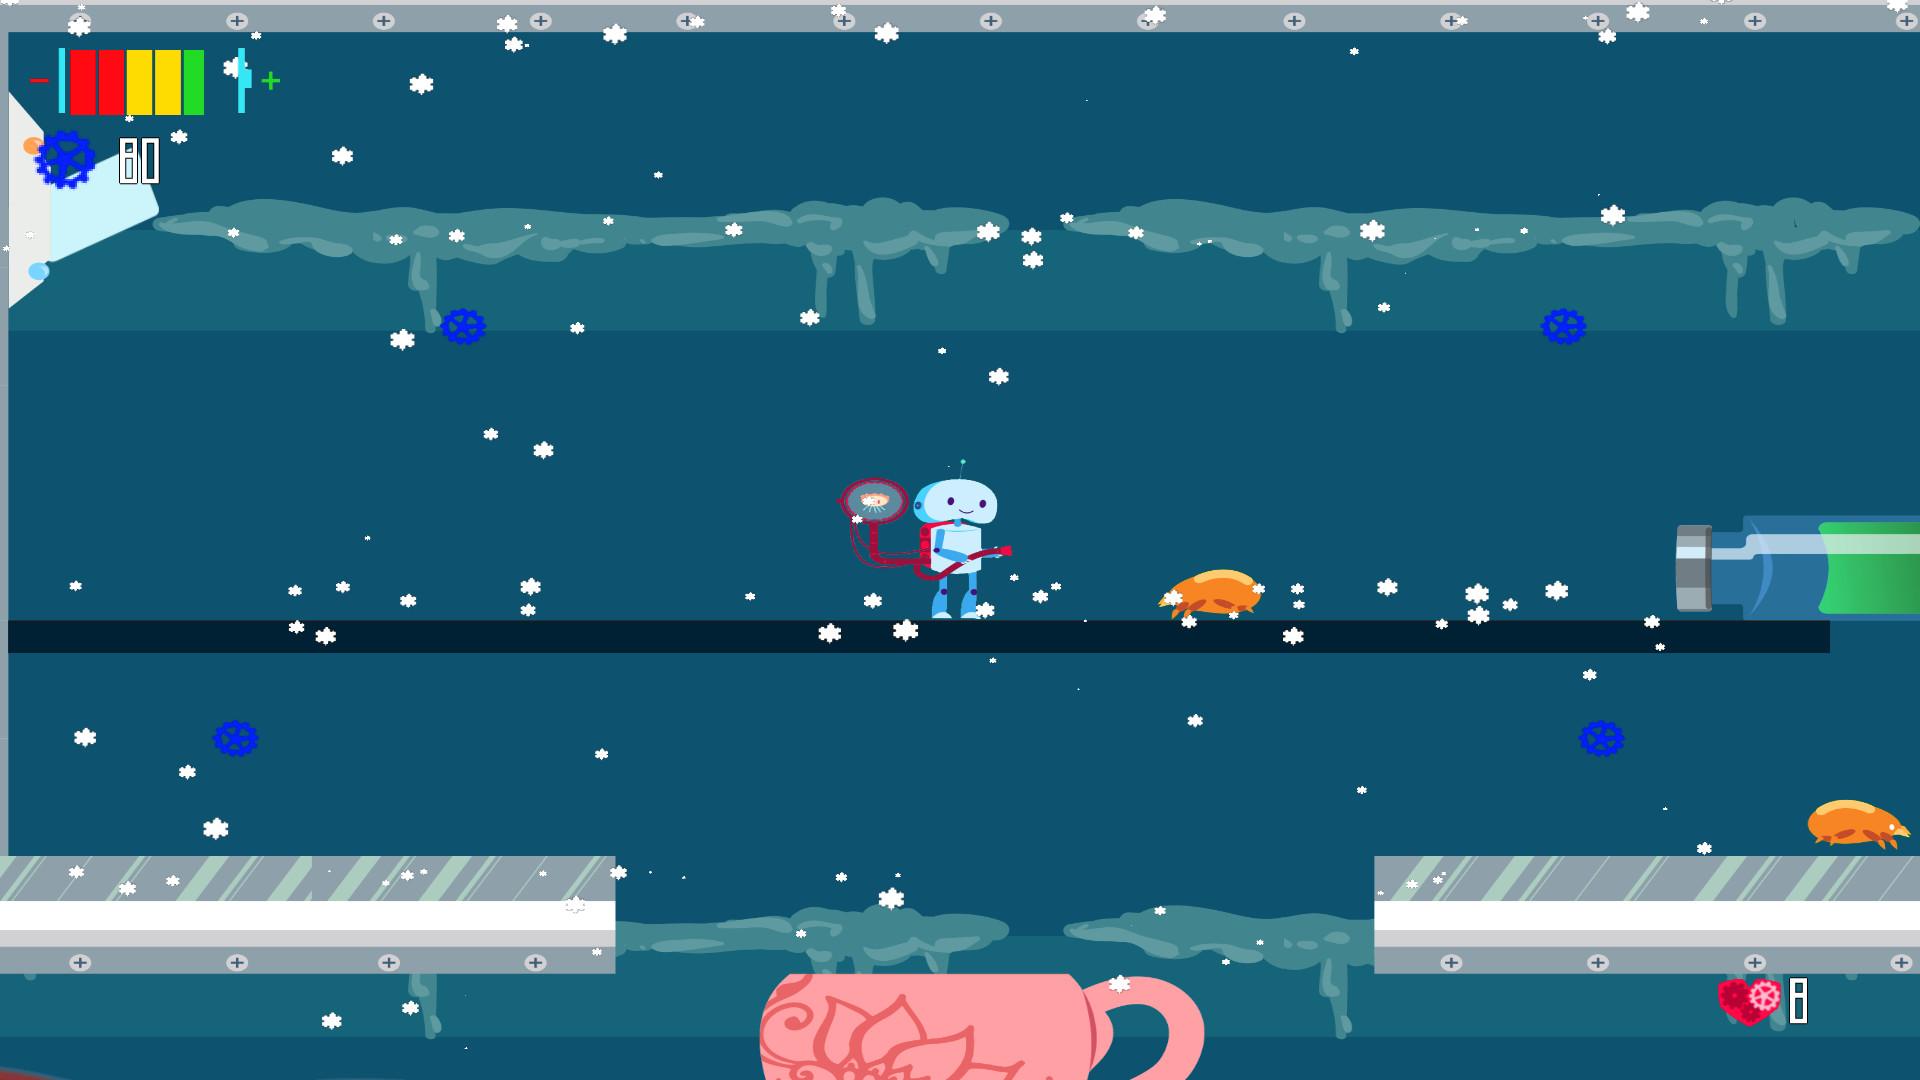 Screenshot №6 from game ROTii